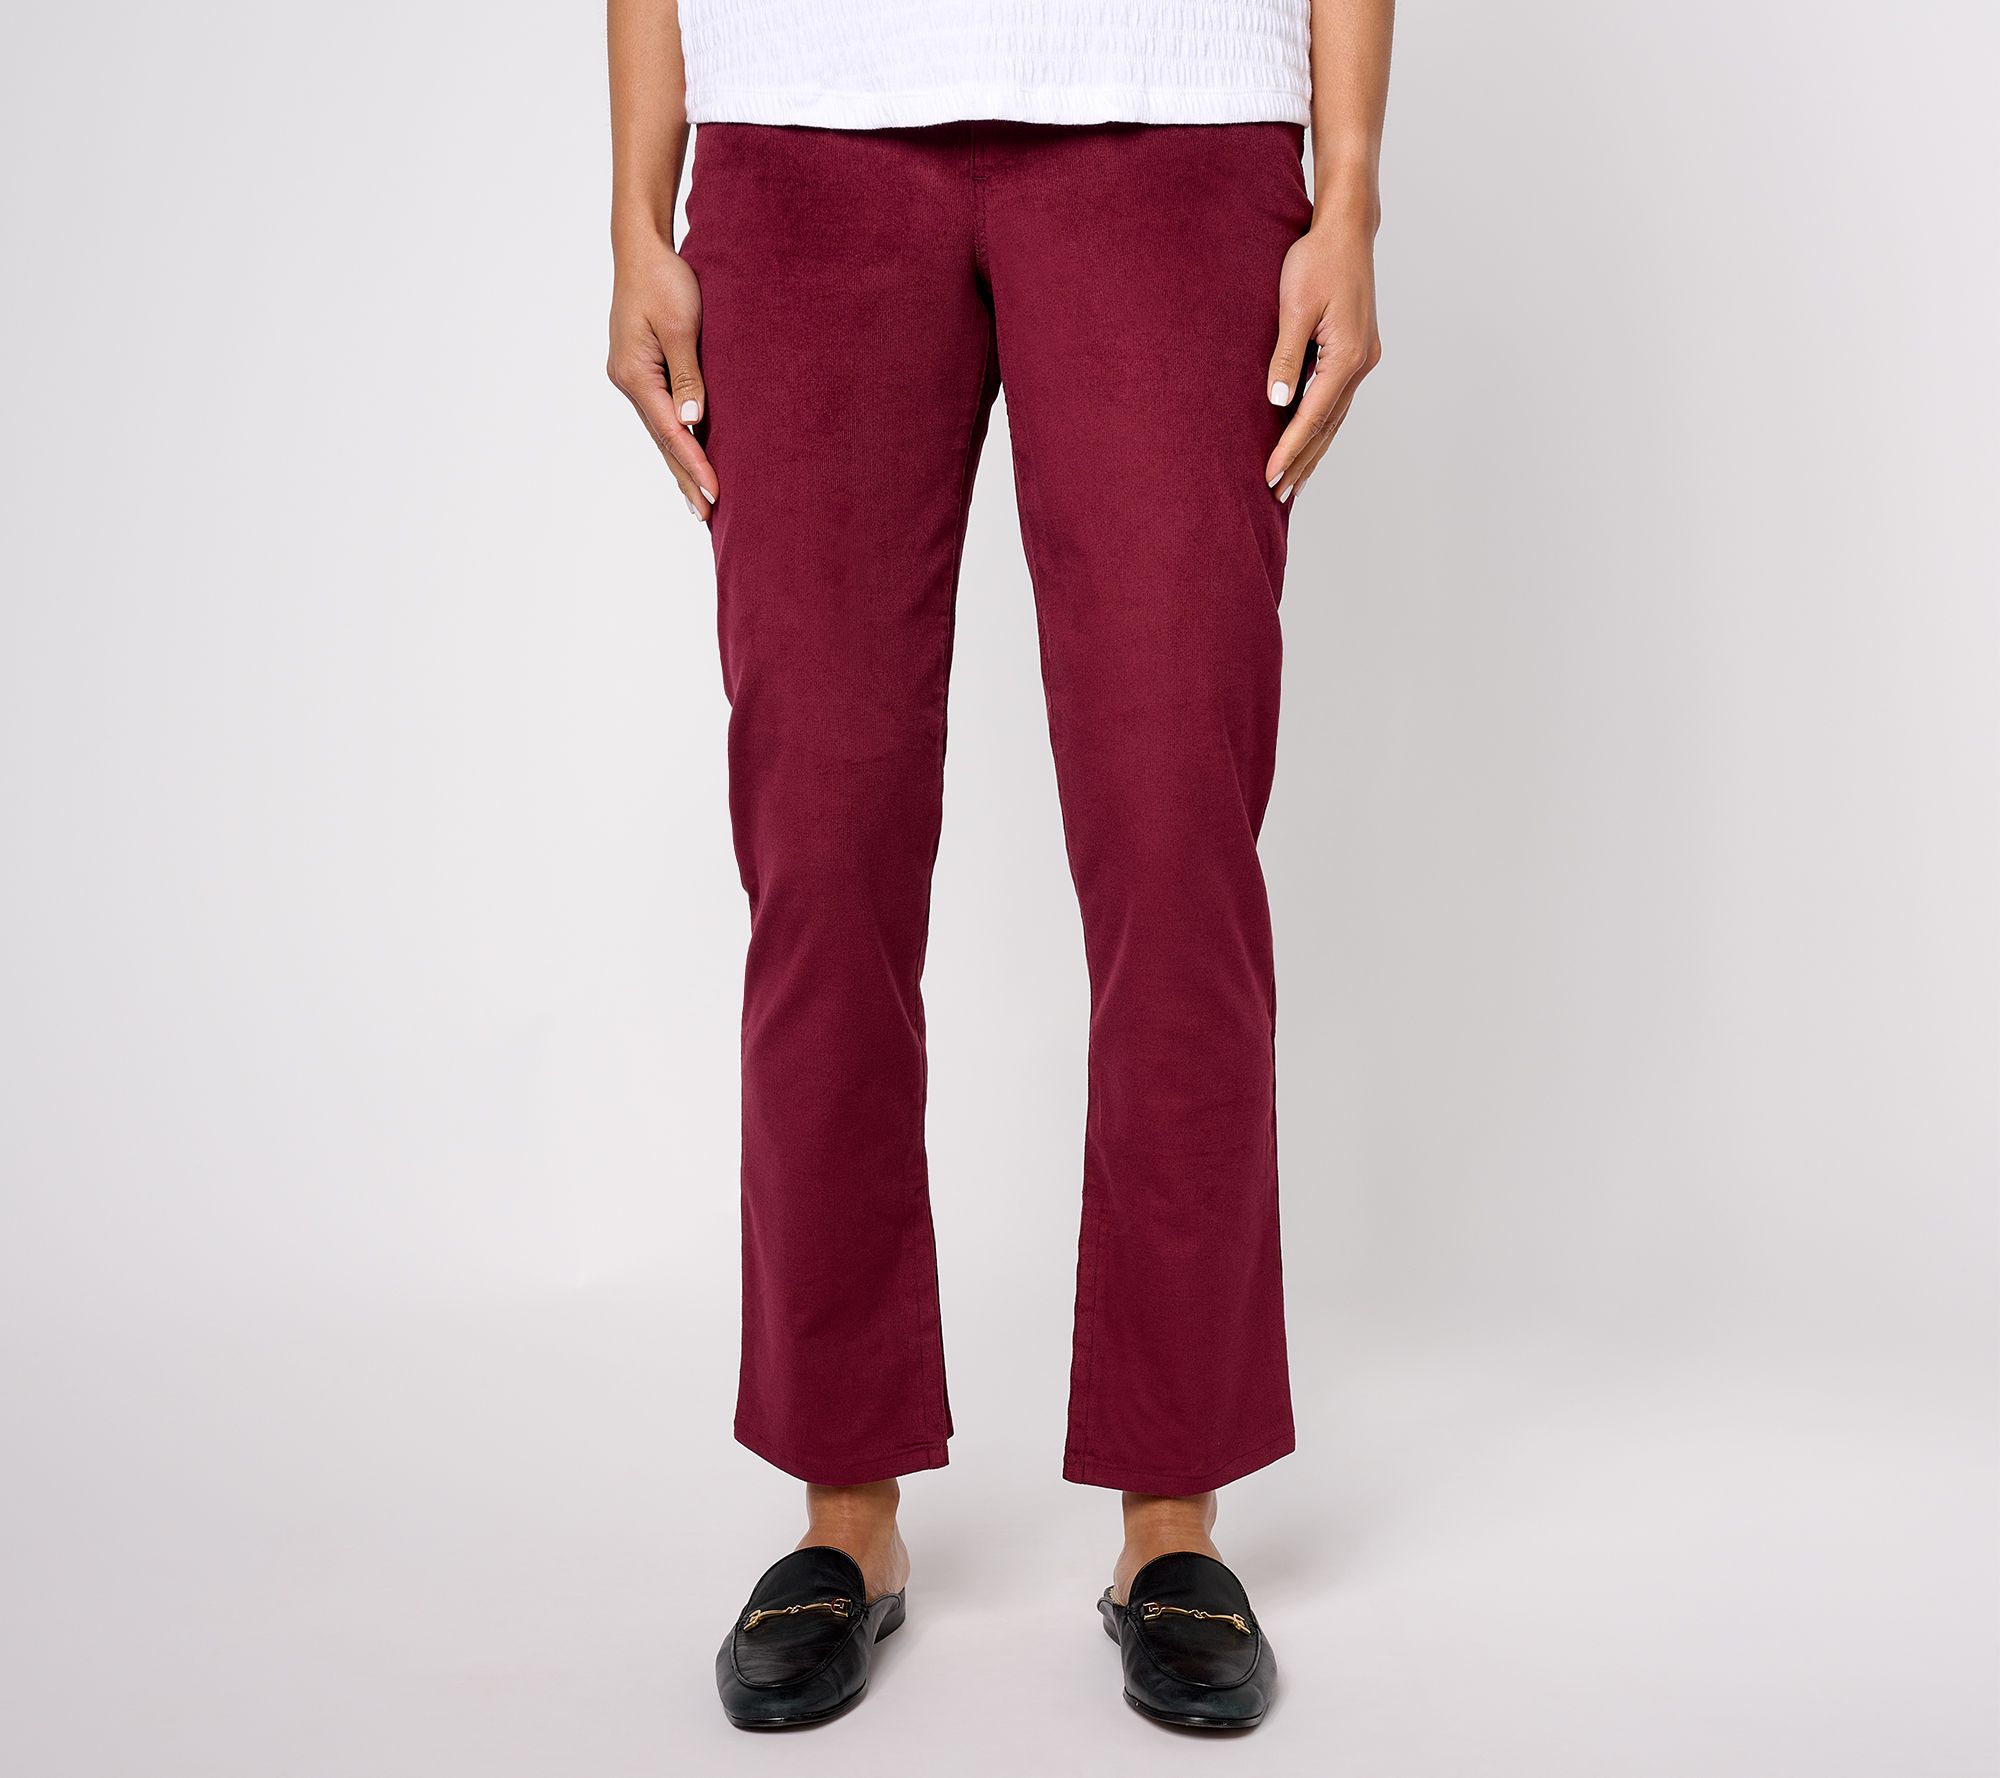 Denim & Co. Tall Comfy Knit Denim Straight Leg Pocket Jeans